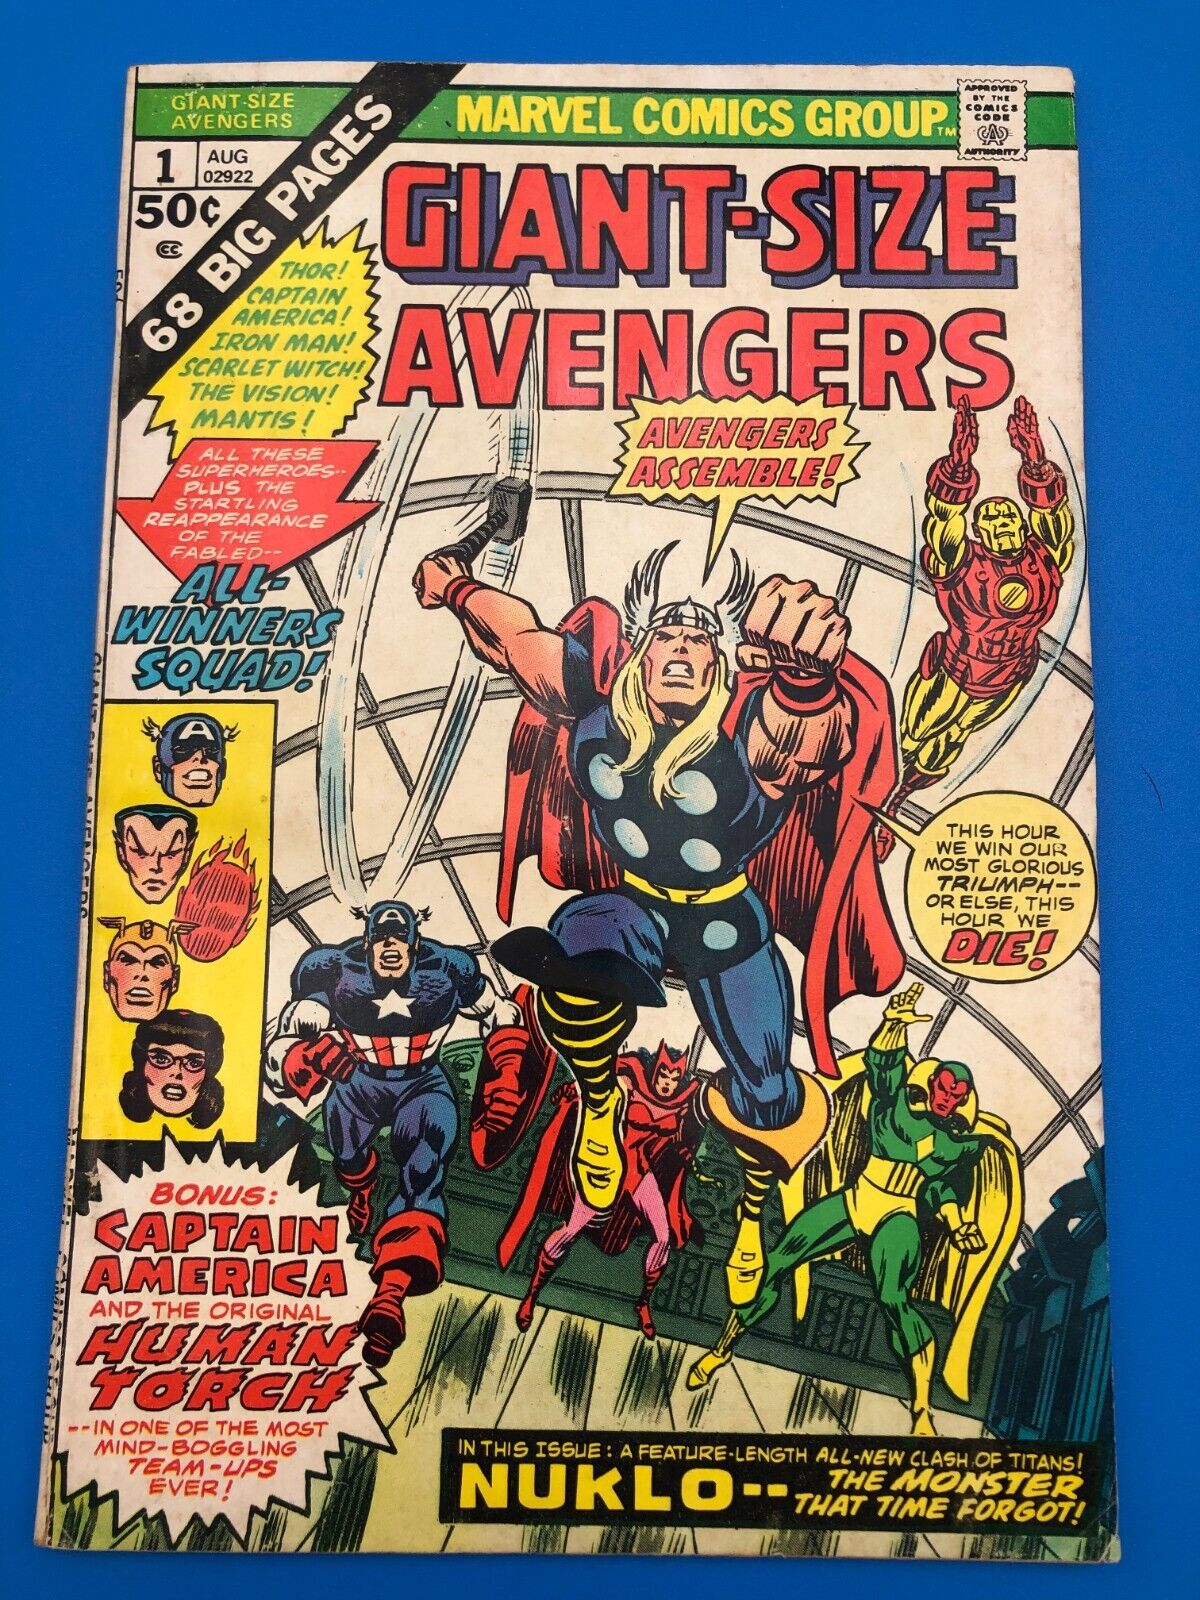 Giant-Size Avengers #1 (1974) - Thor Iron Man Nuklo Appearances - VG READER